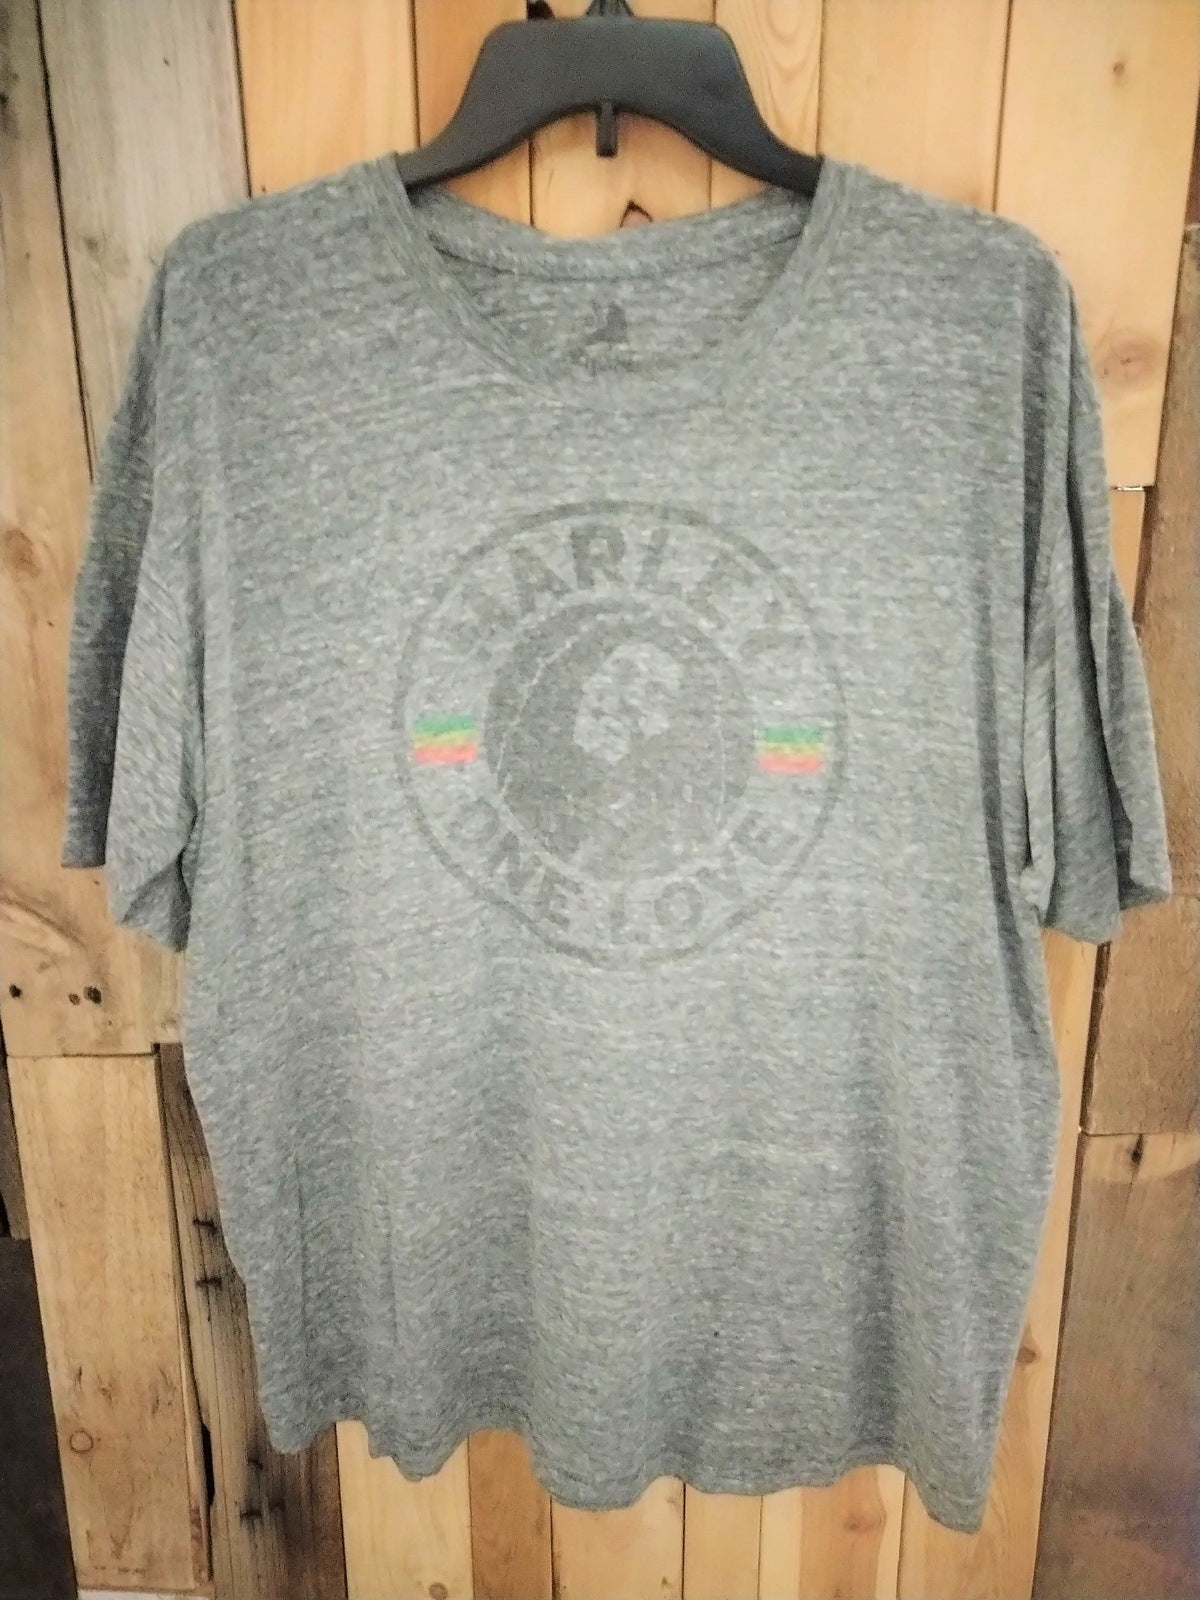 Bob Marley Official Merchandise "One Love" T Shirt Size XL 994875